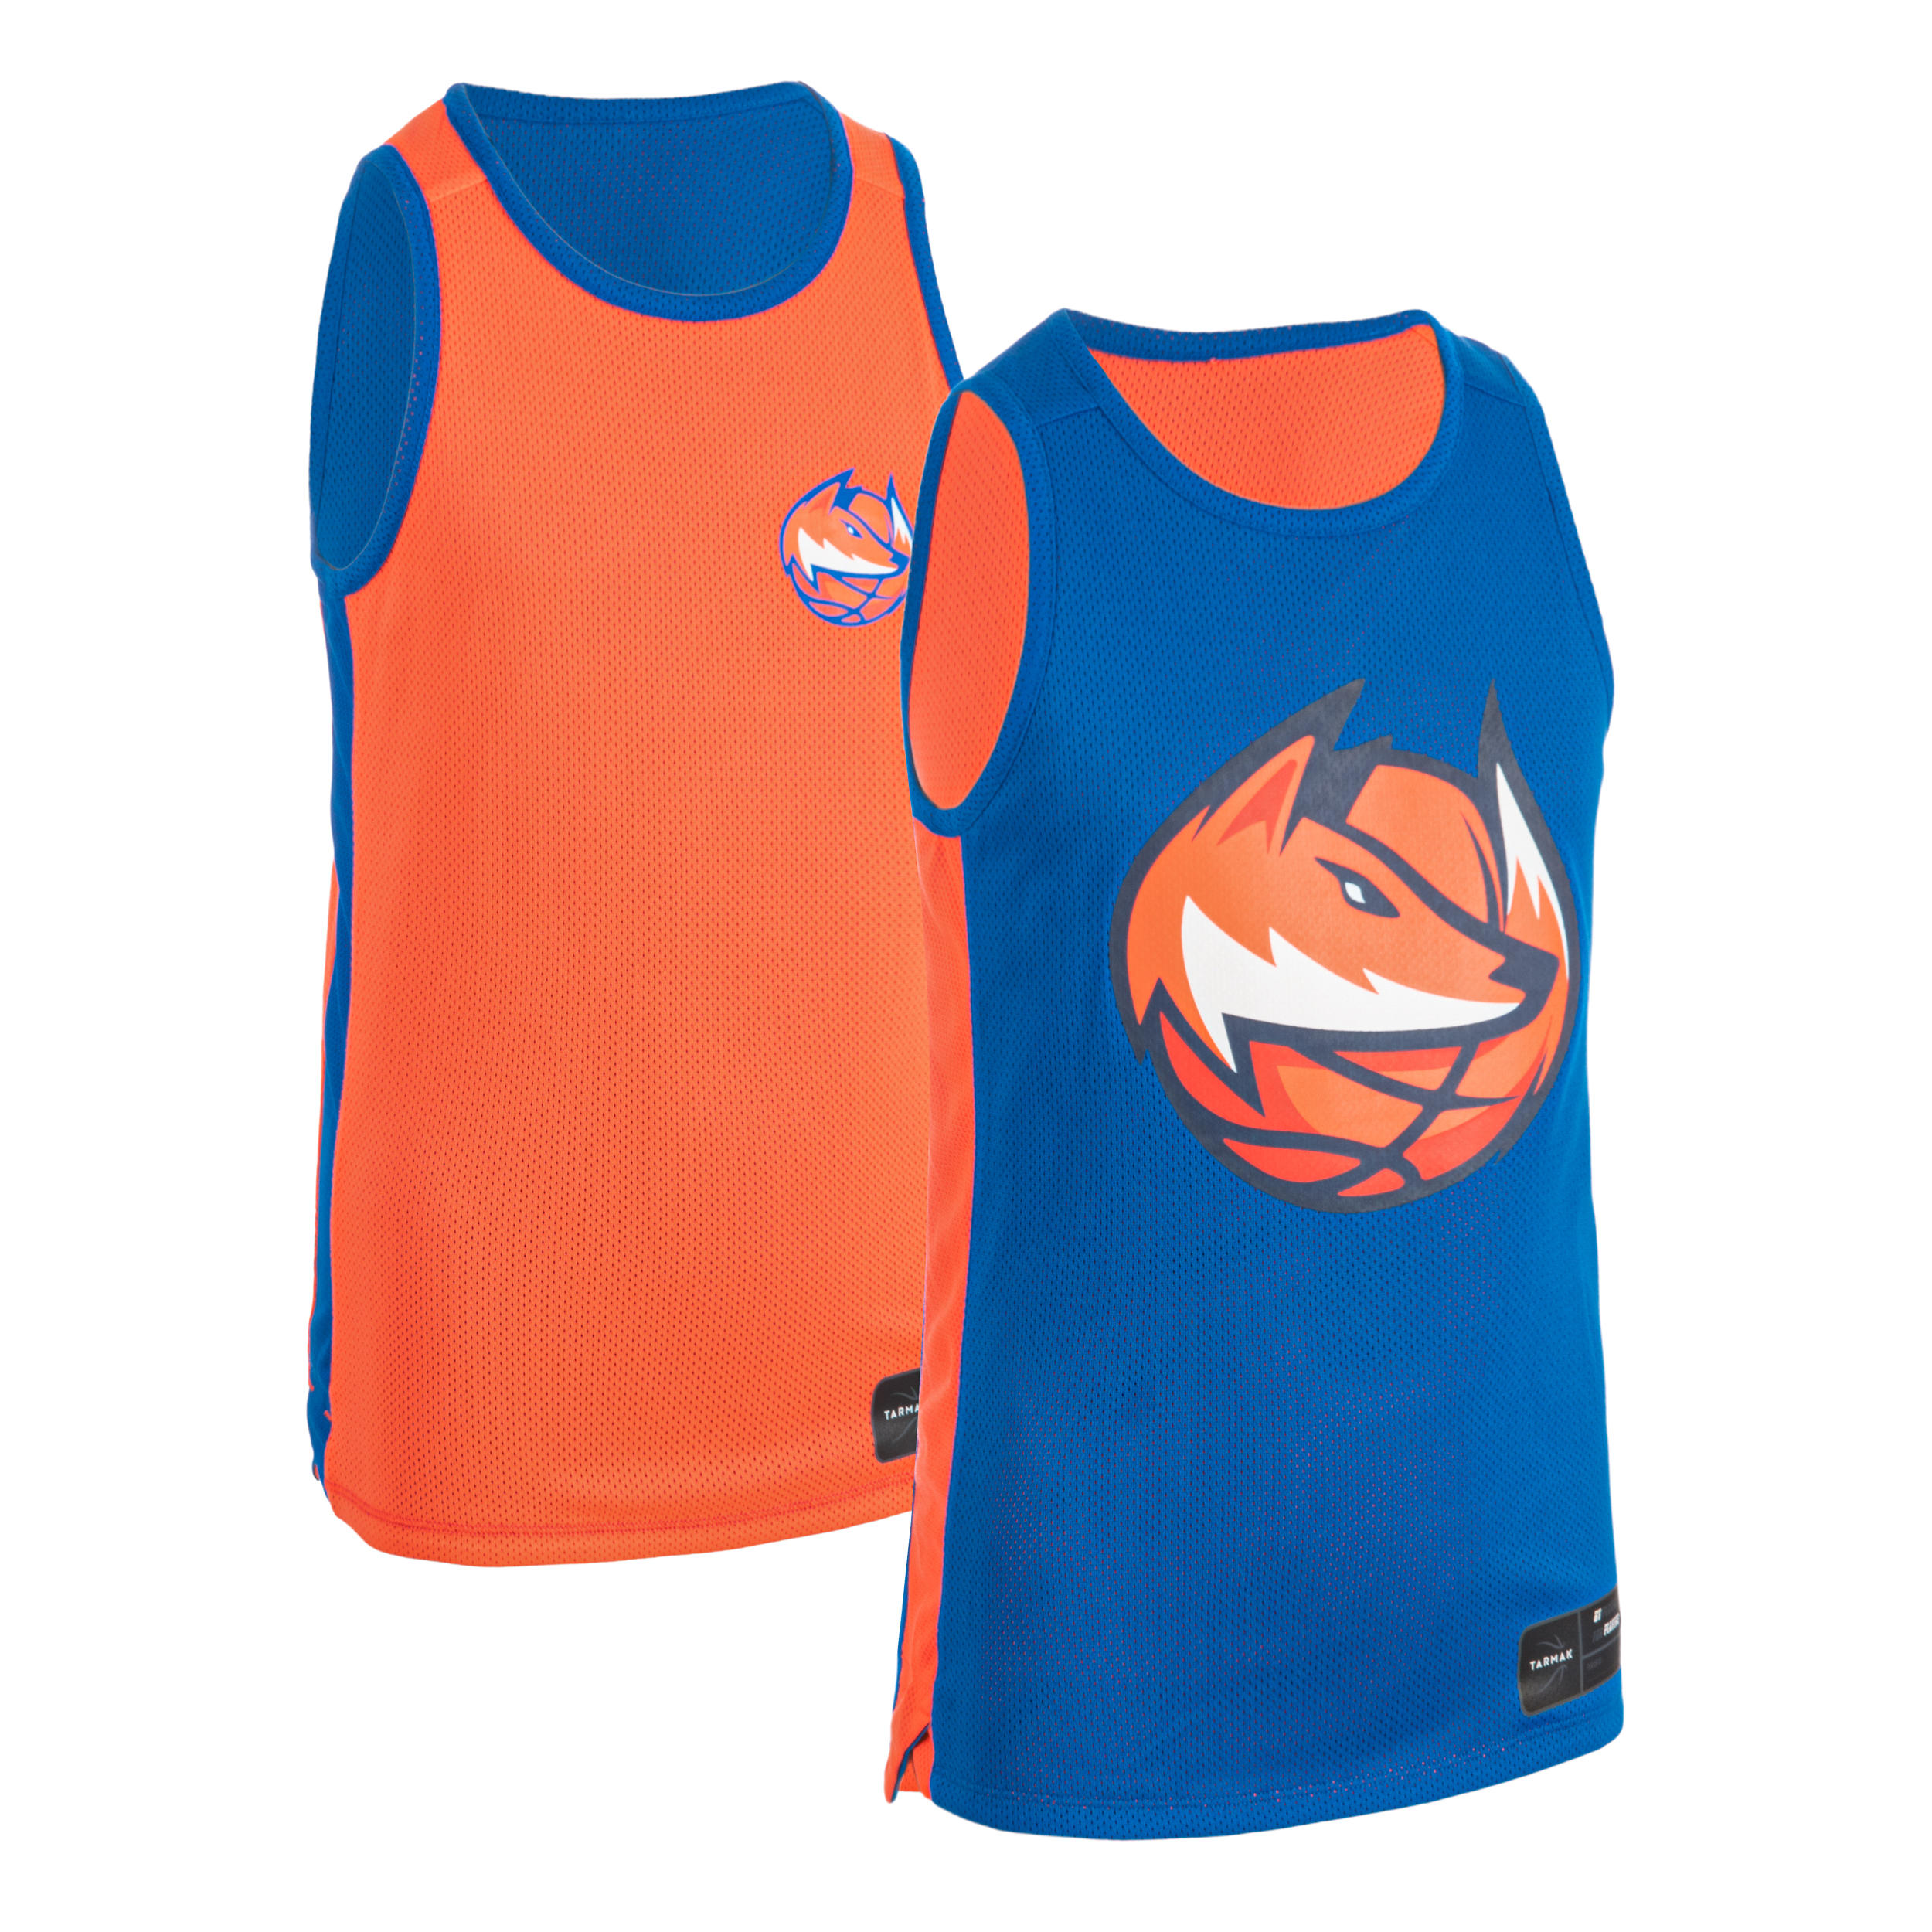 blue and orange basketball jersey